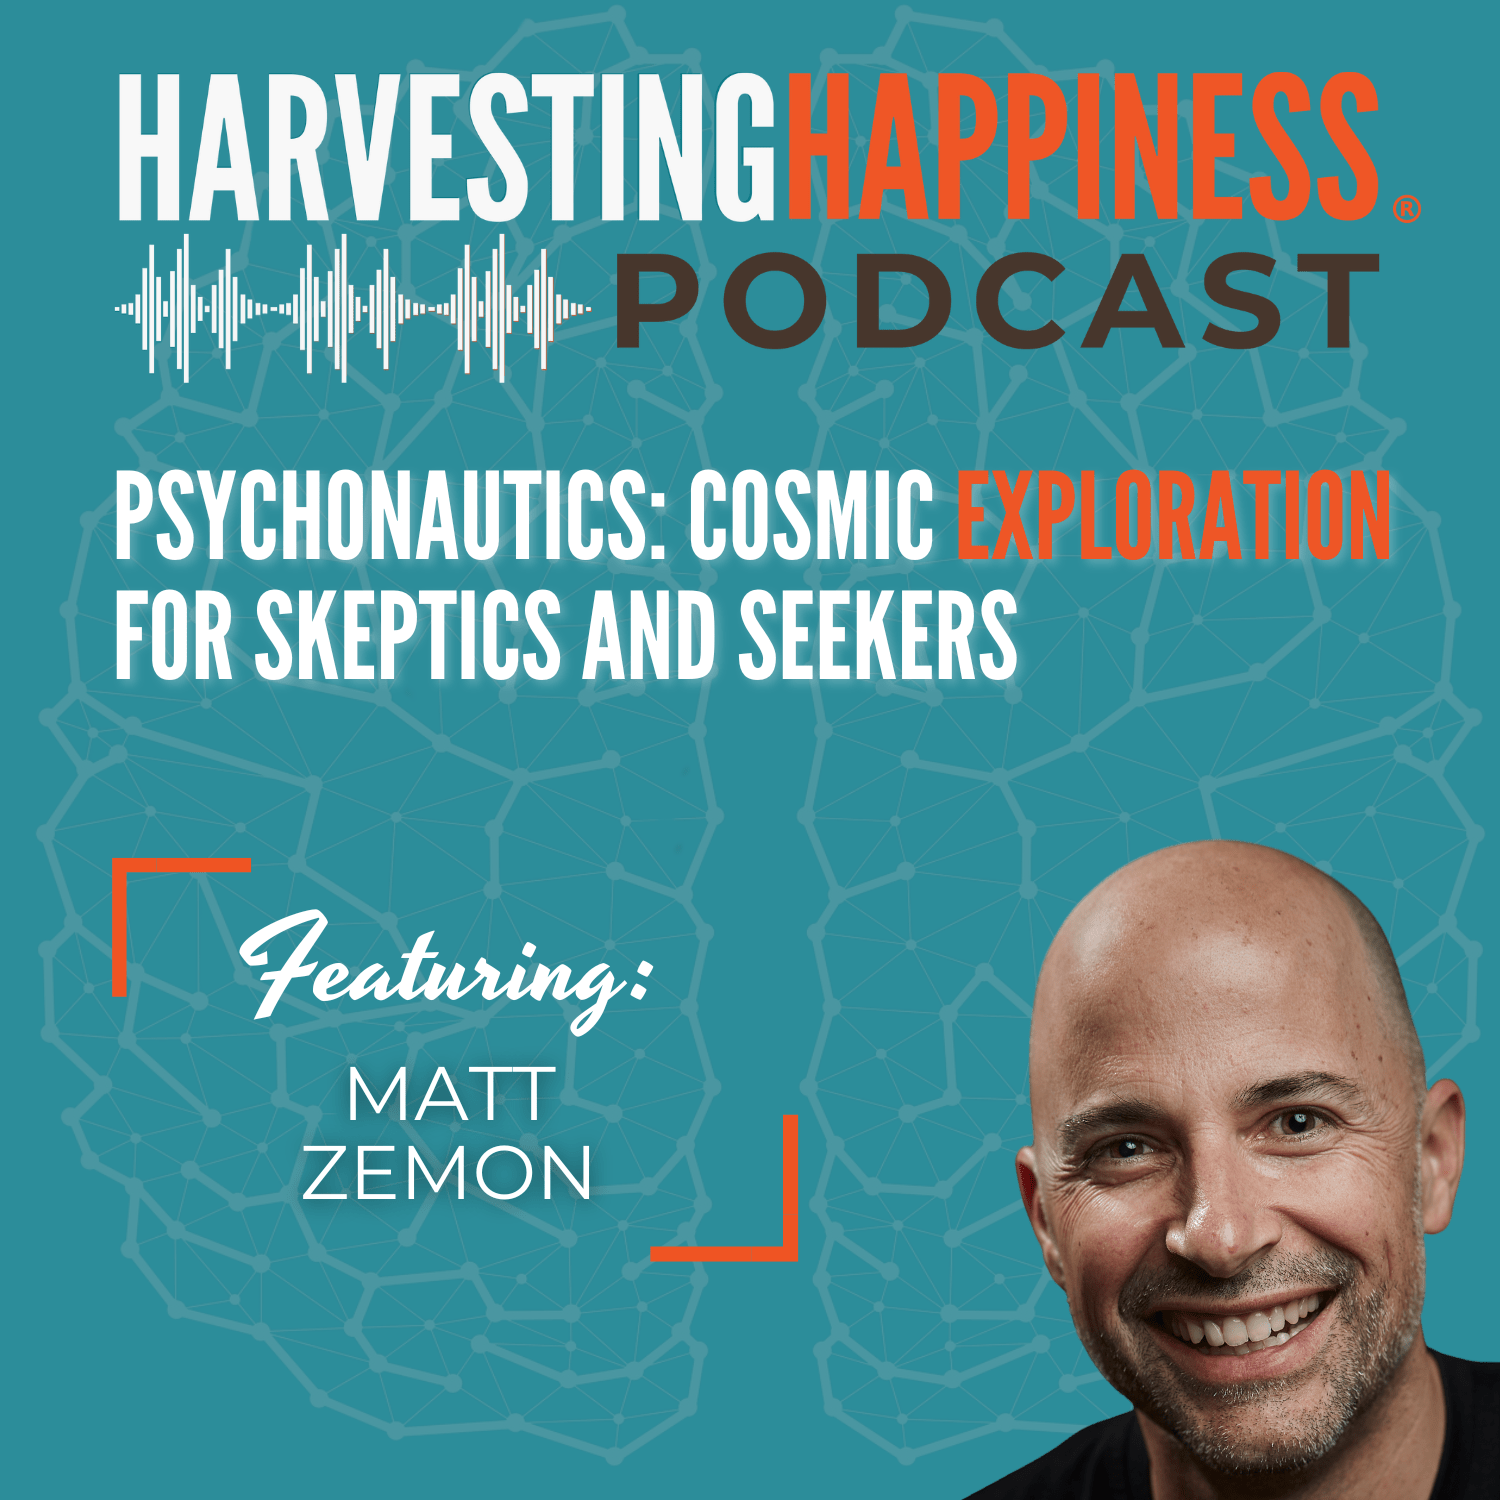 Psychonautics: Cosmic Exploration for Skeptics and Seekers with Matt Zemon